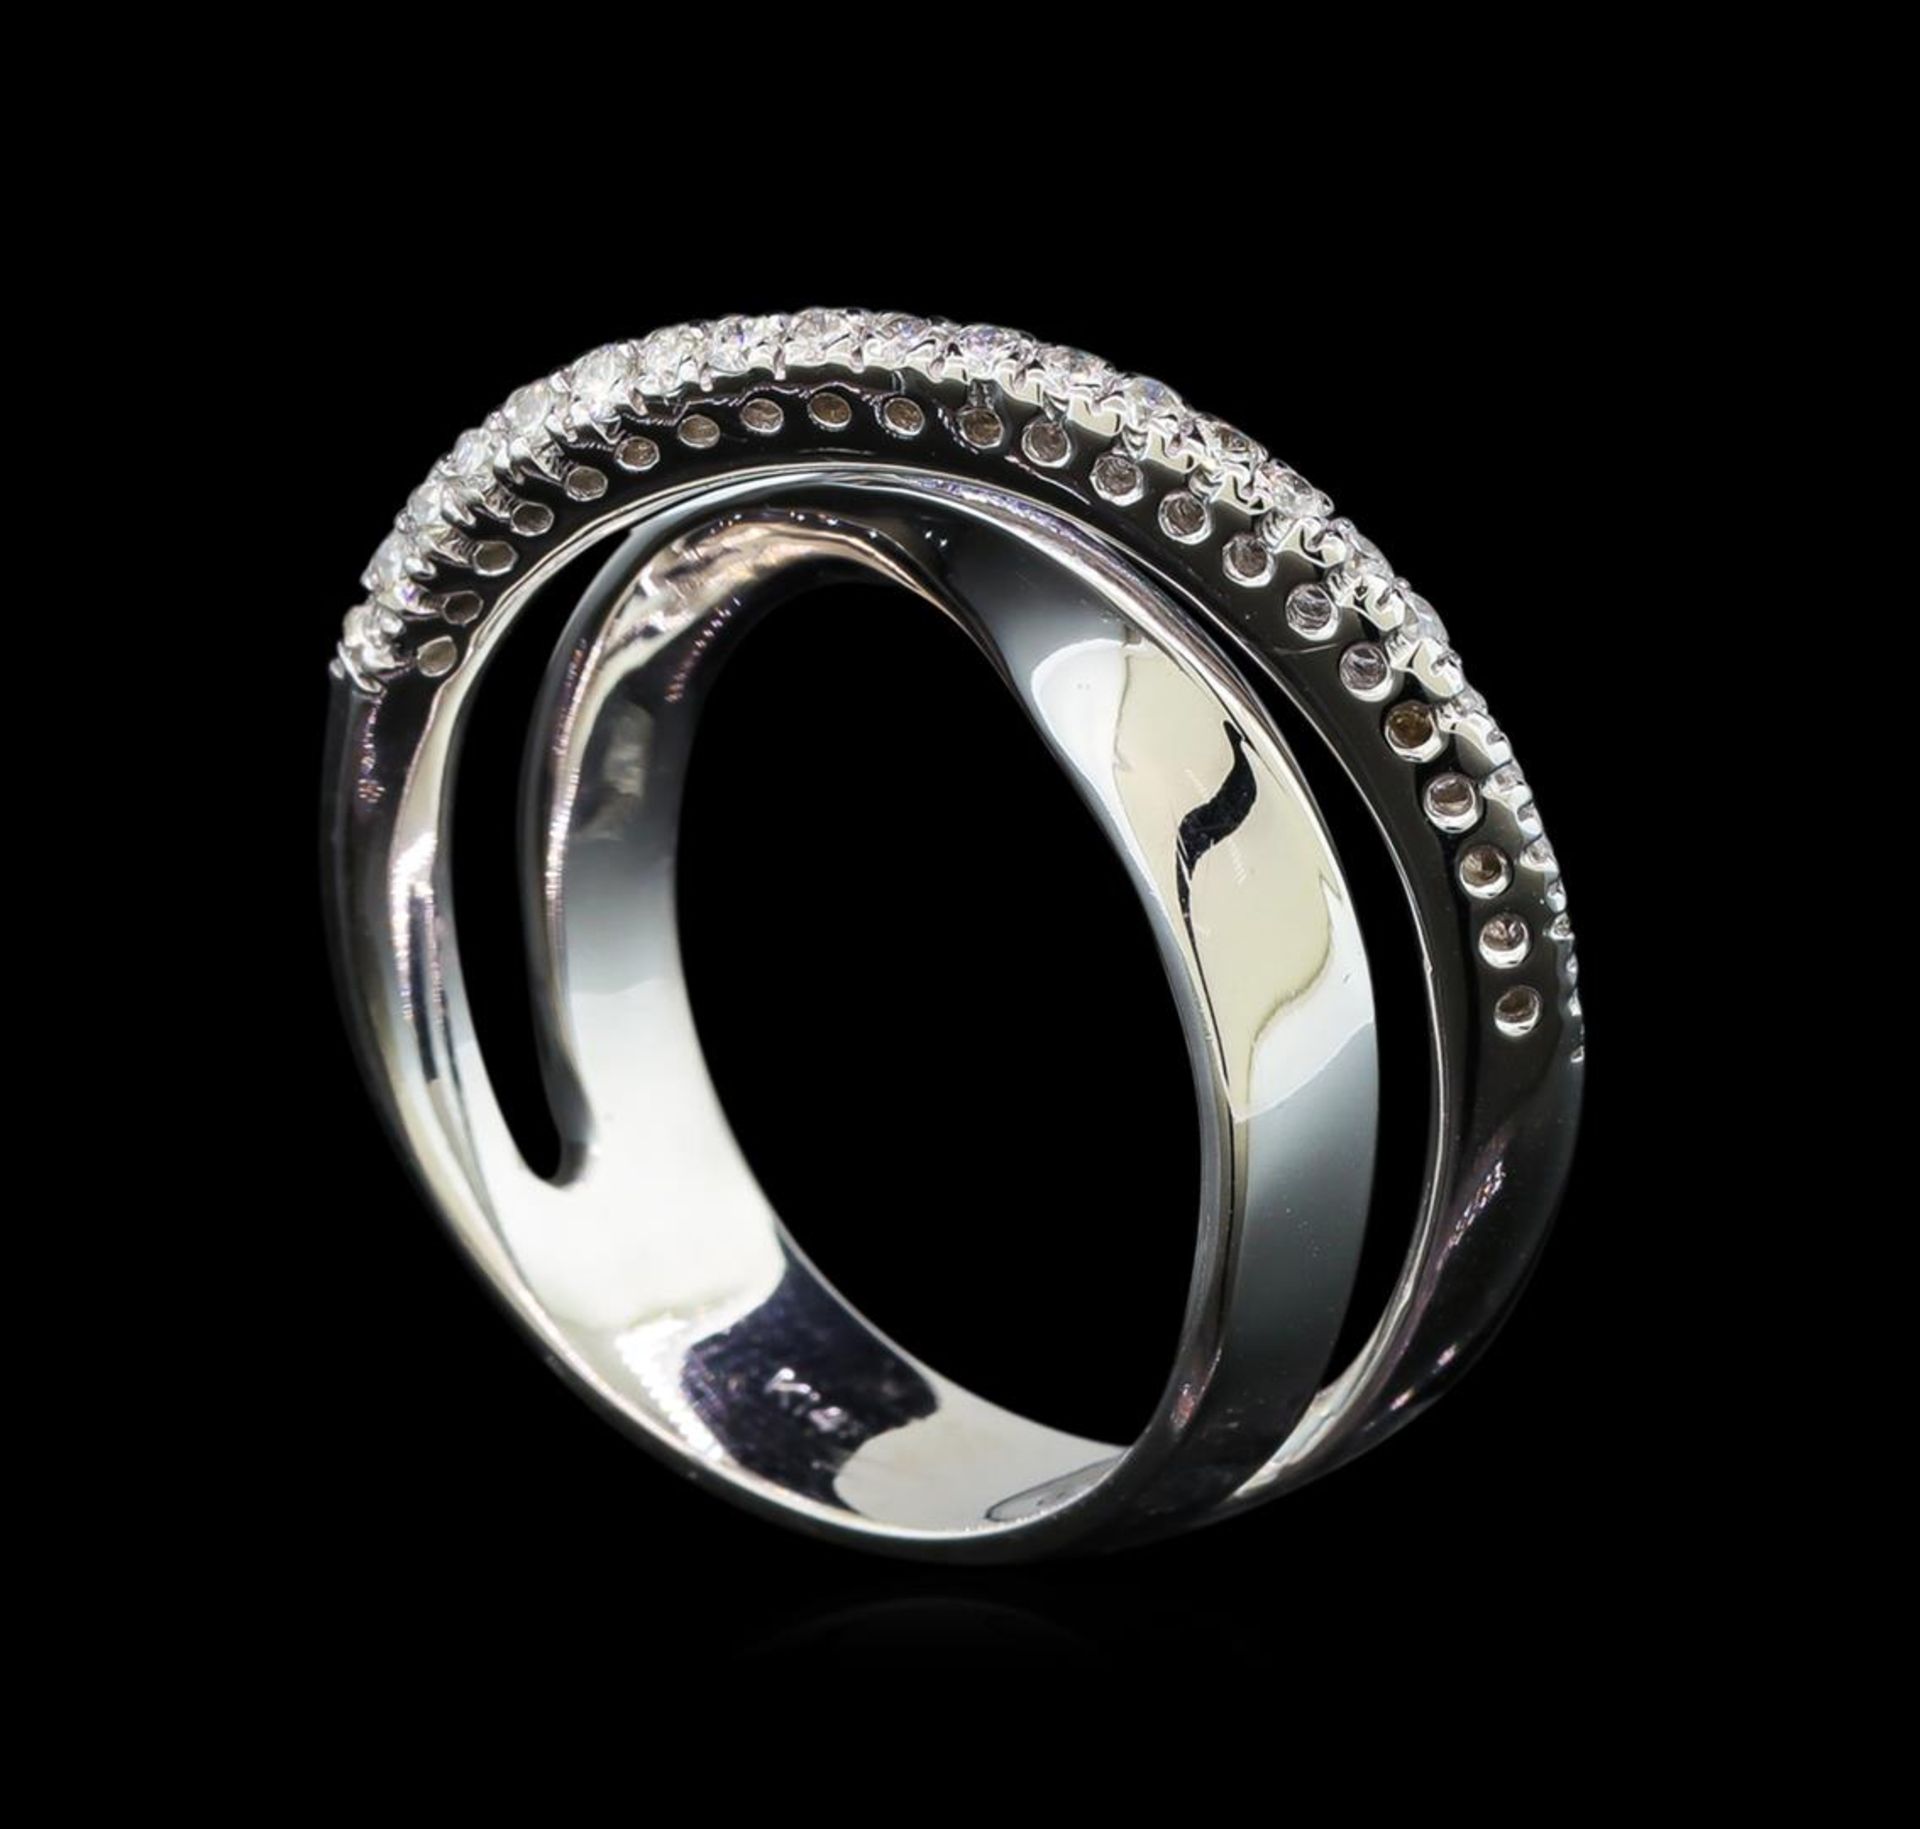 0.25 ctw Diamond Ring - 14KT White Gold - Image 3 of 3